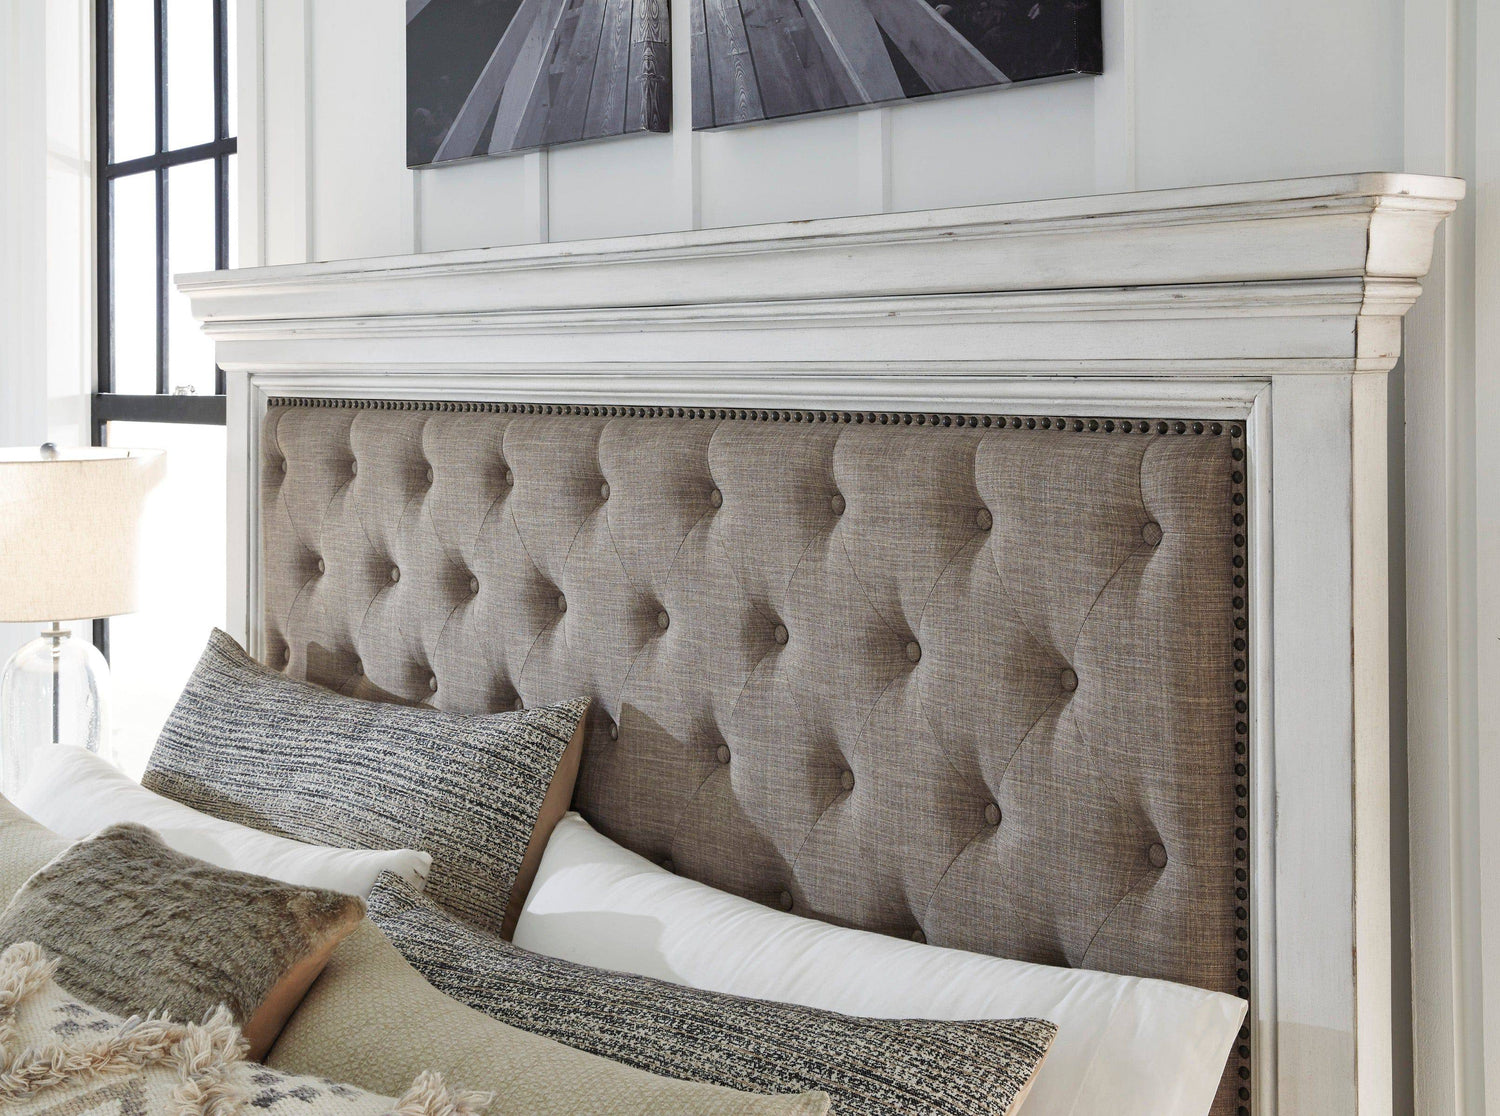 Kanwyn Whitewash Upholstered Panel Bedroom Set - Decohub Home